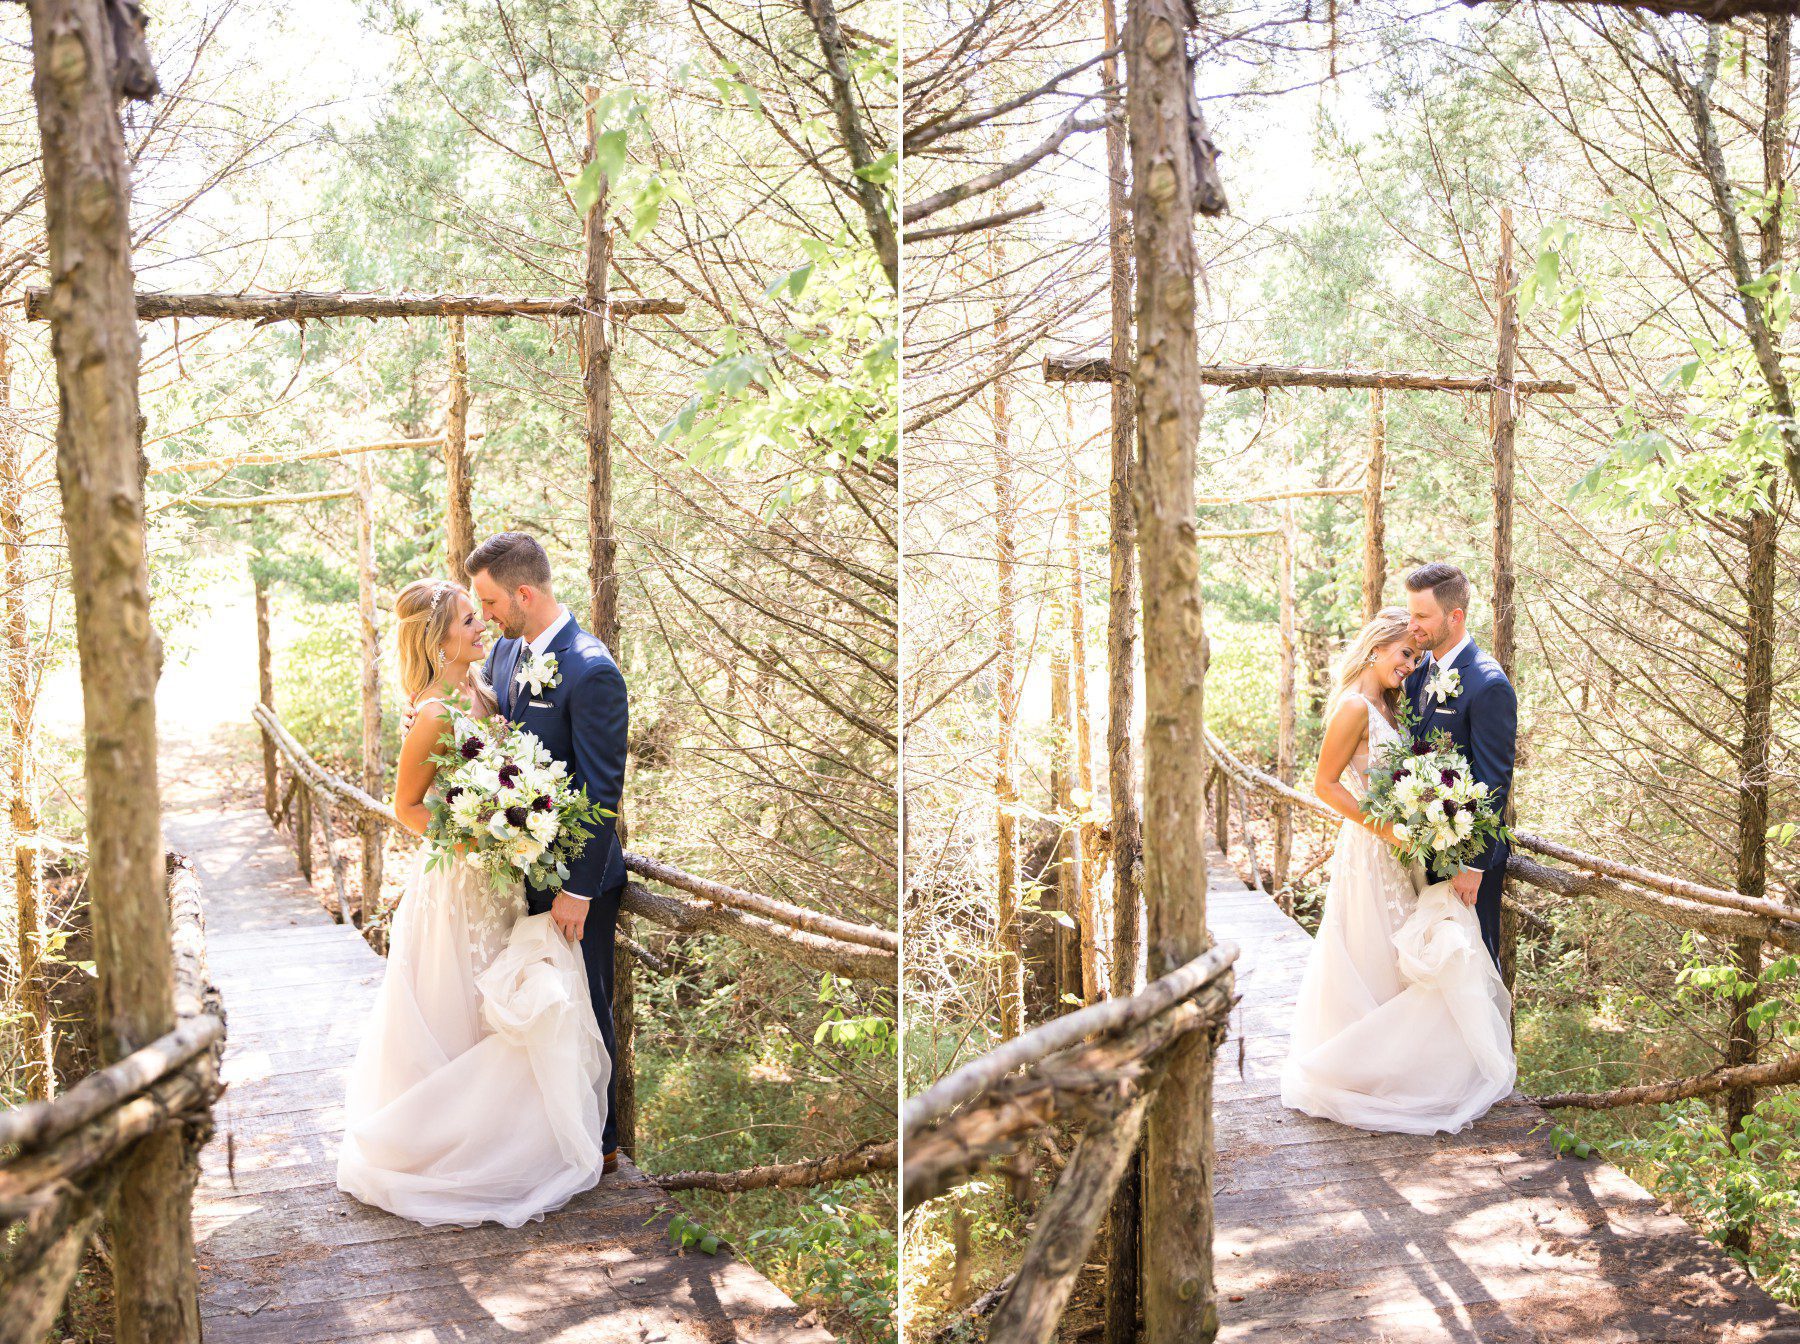 Cedarwood Weddings woodsy romantic natural bride and groom